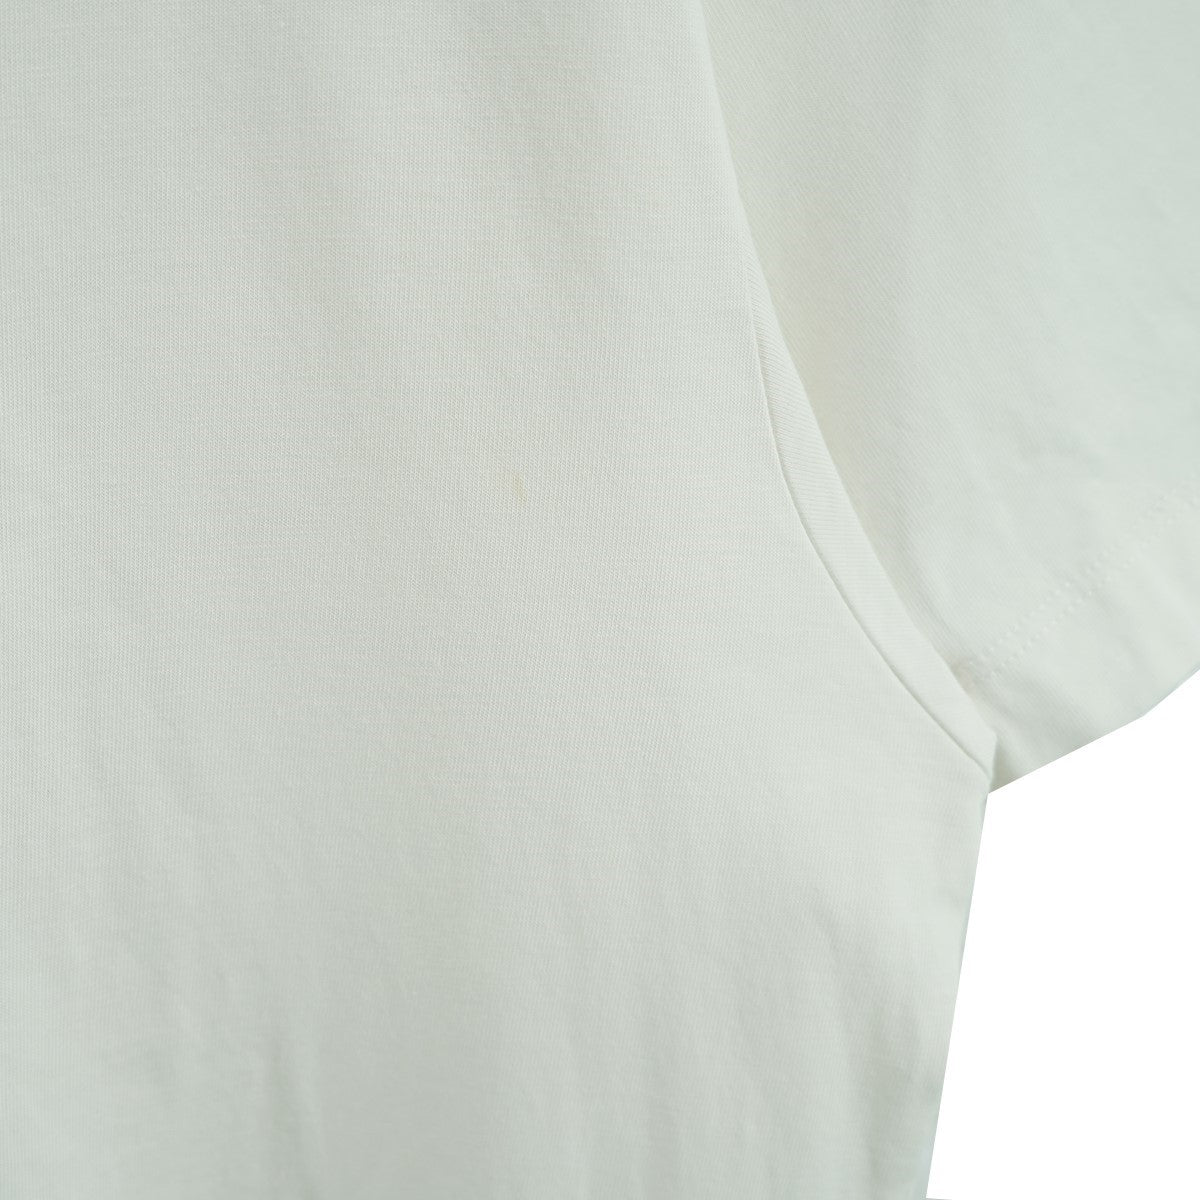 JIL Sander(ジルサンダー) JIL SANDER+ ジルサンダー プラス ロゴ パッチ Tシャツ ホワイト サイズ:L メンズ Tシャツ・カットソー 中古・古着